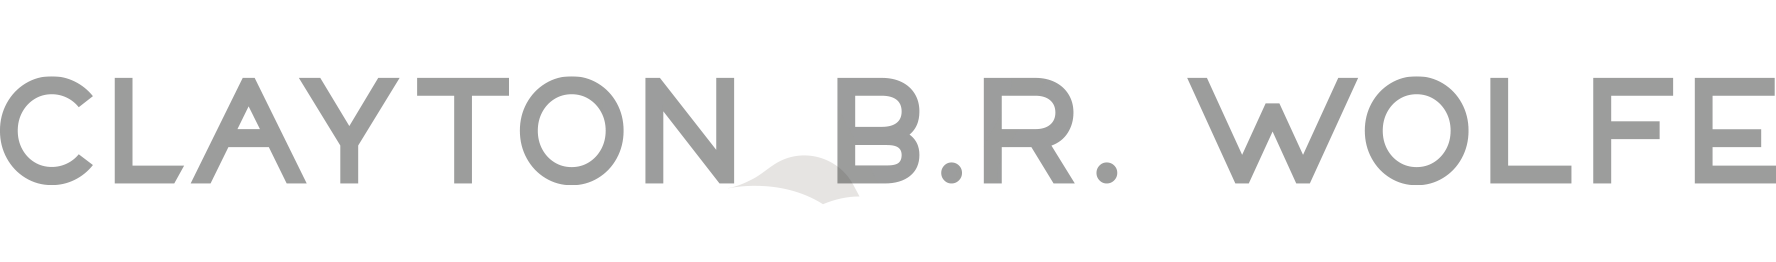 Clayton BR Wolfe logo transparent